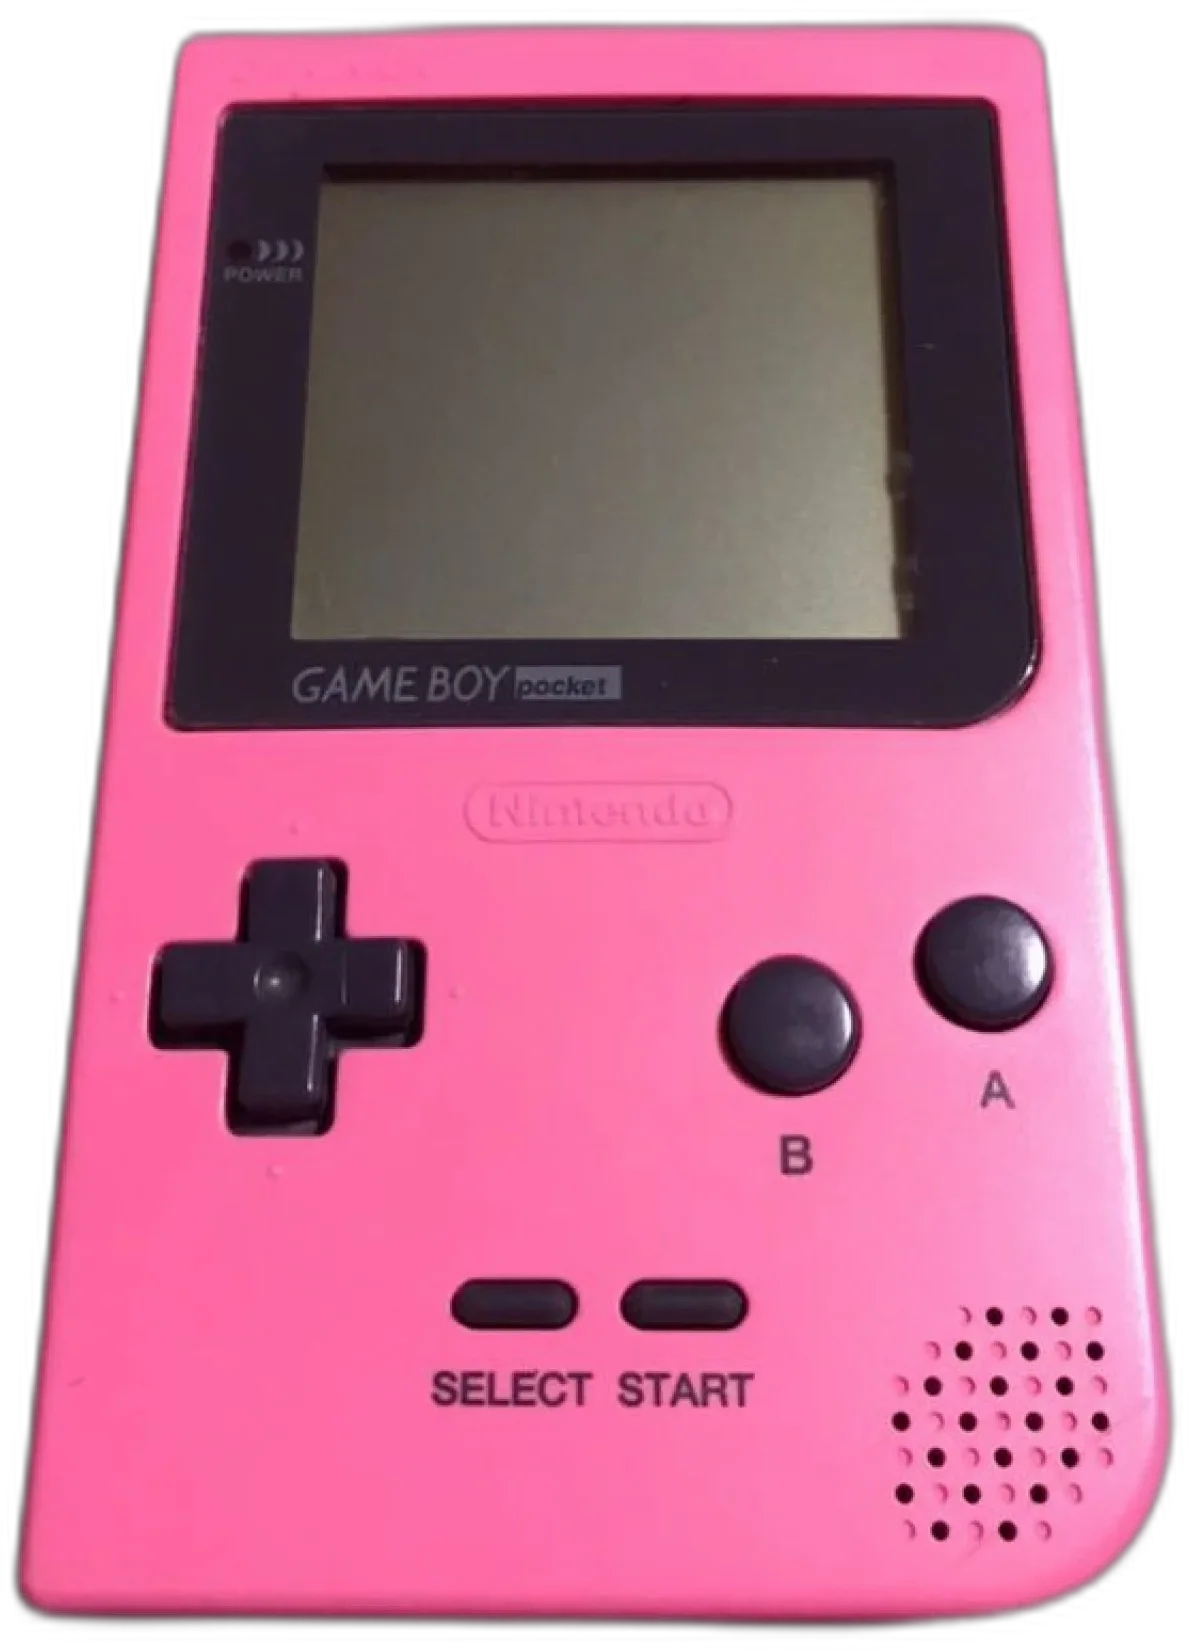  Nintendo Game Boy Pocket Pink Console [EU]